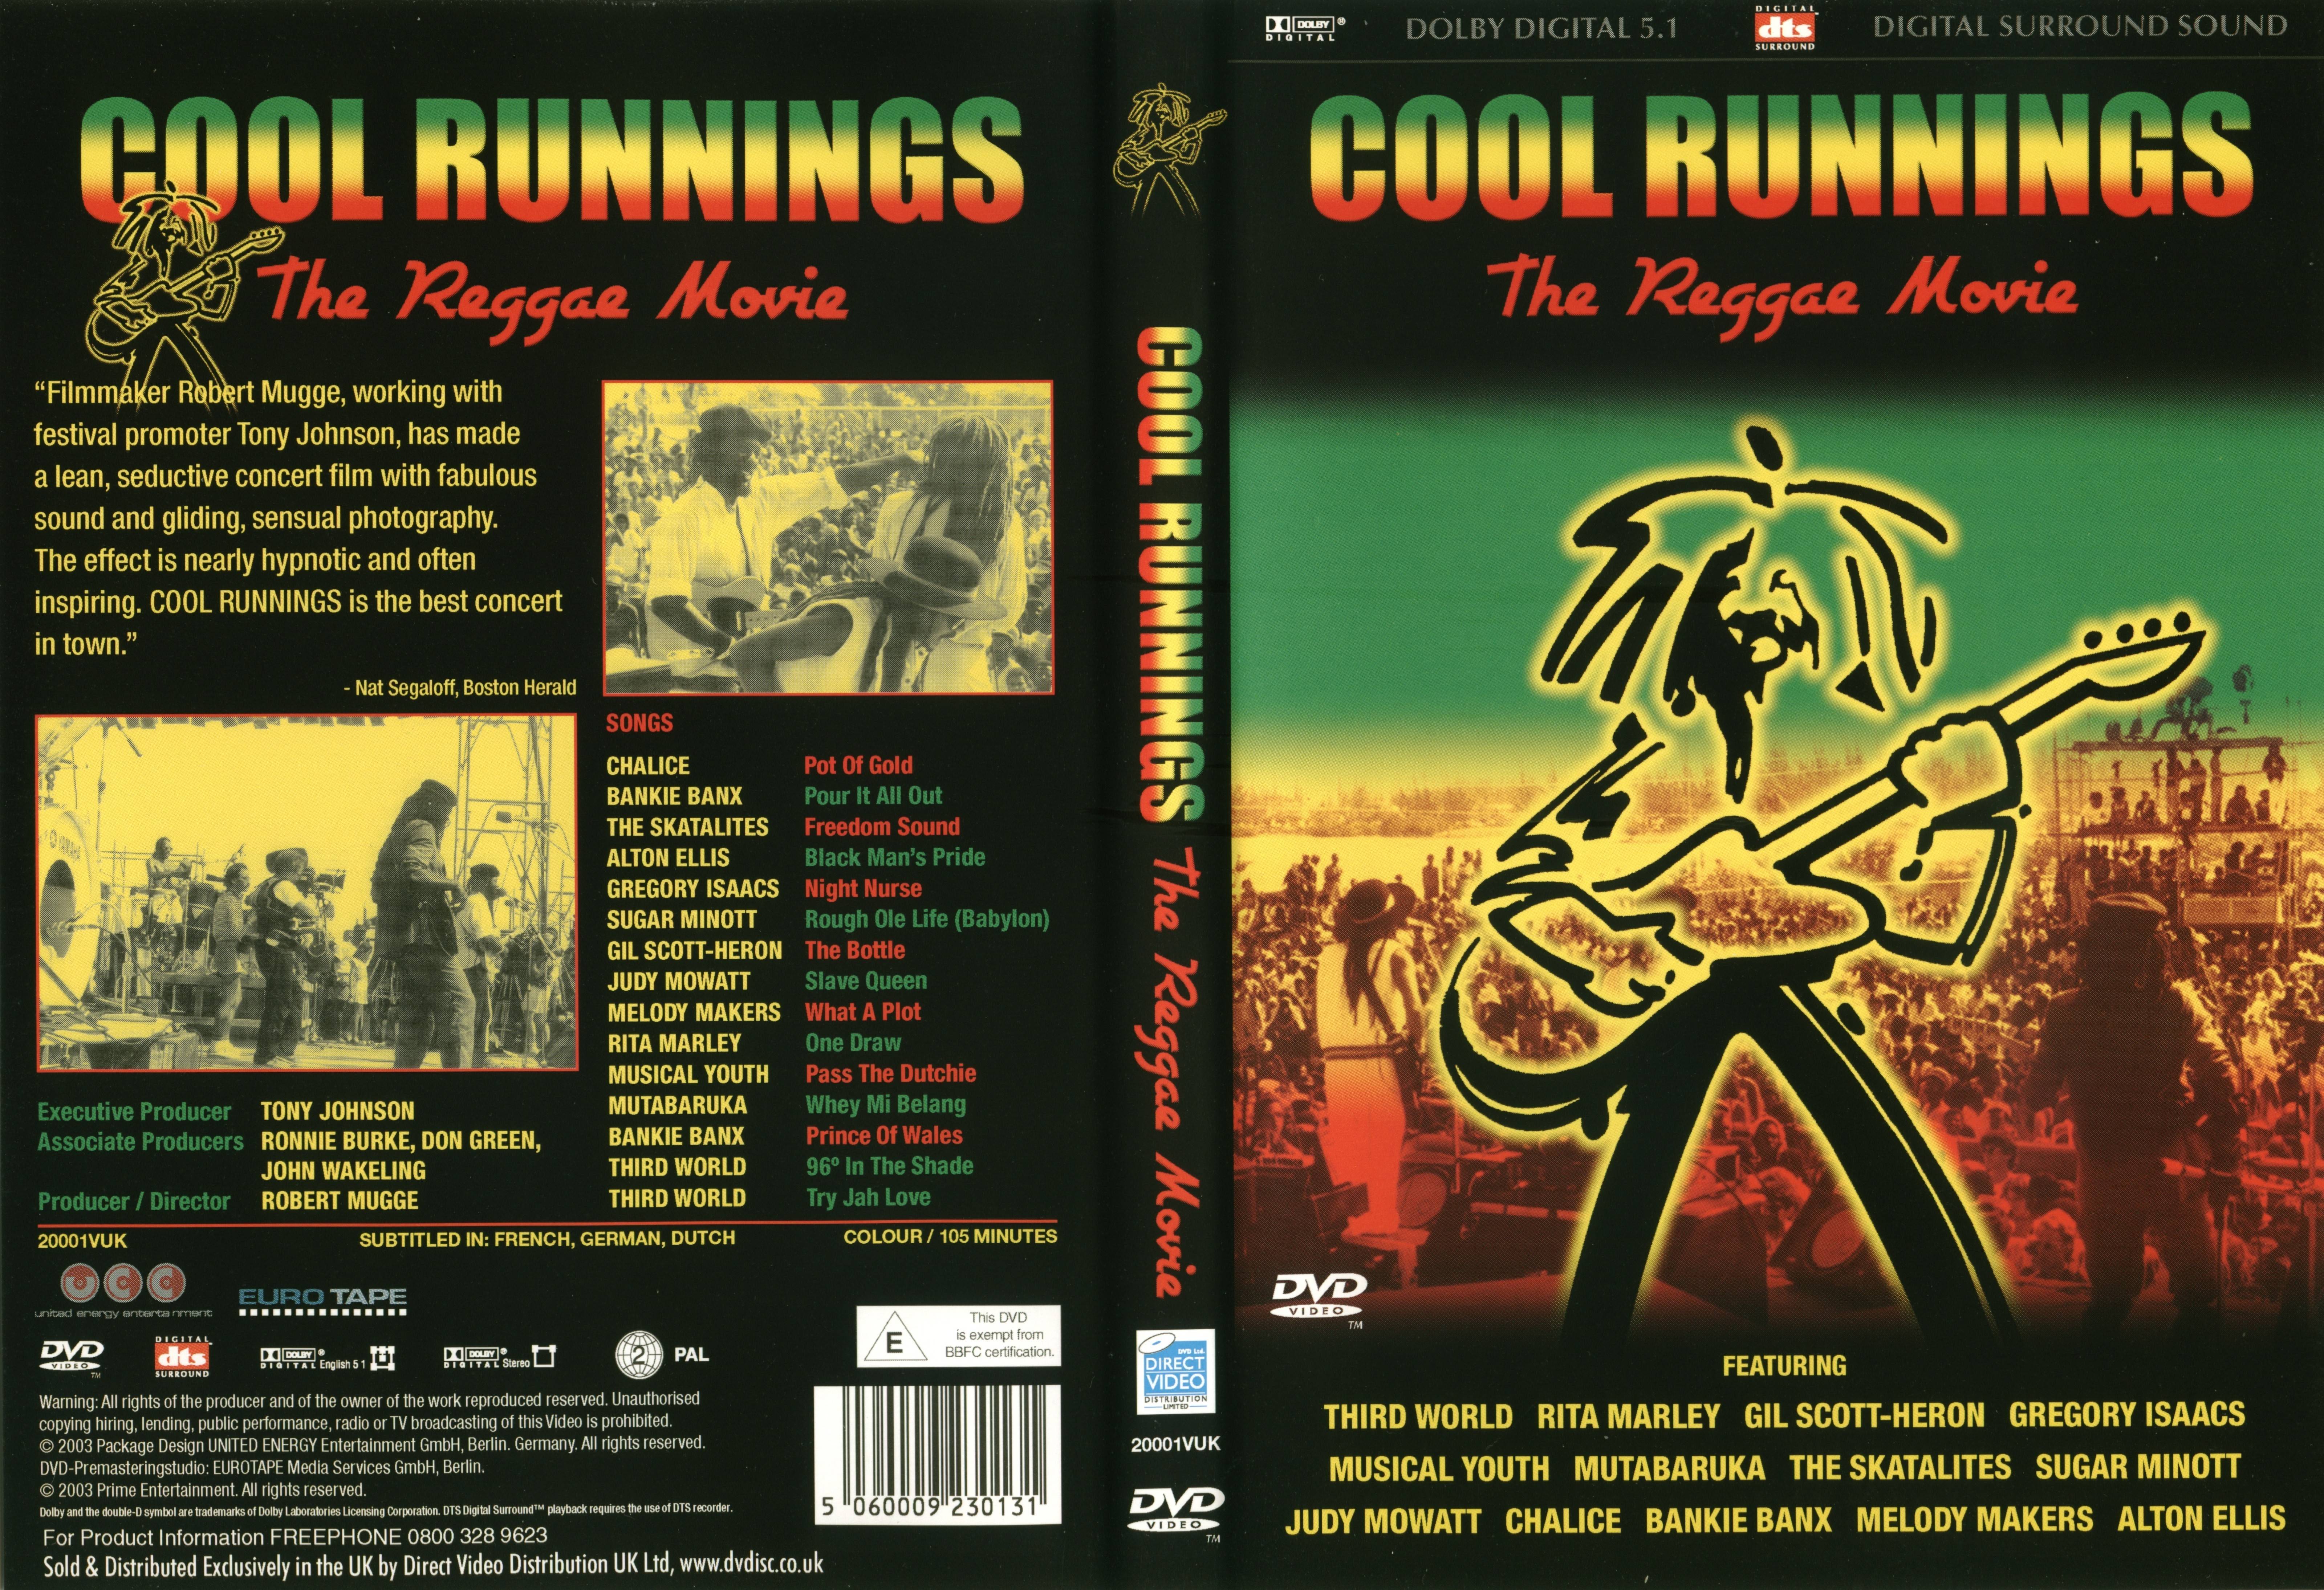 Jaquette DVD Cool runnings the reggae movie